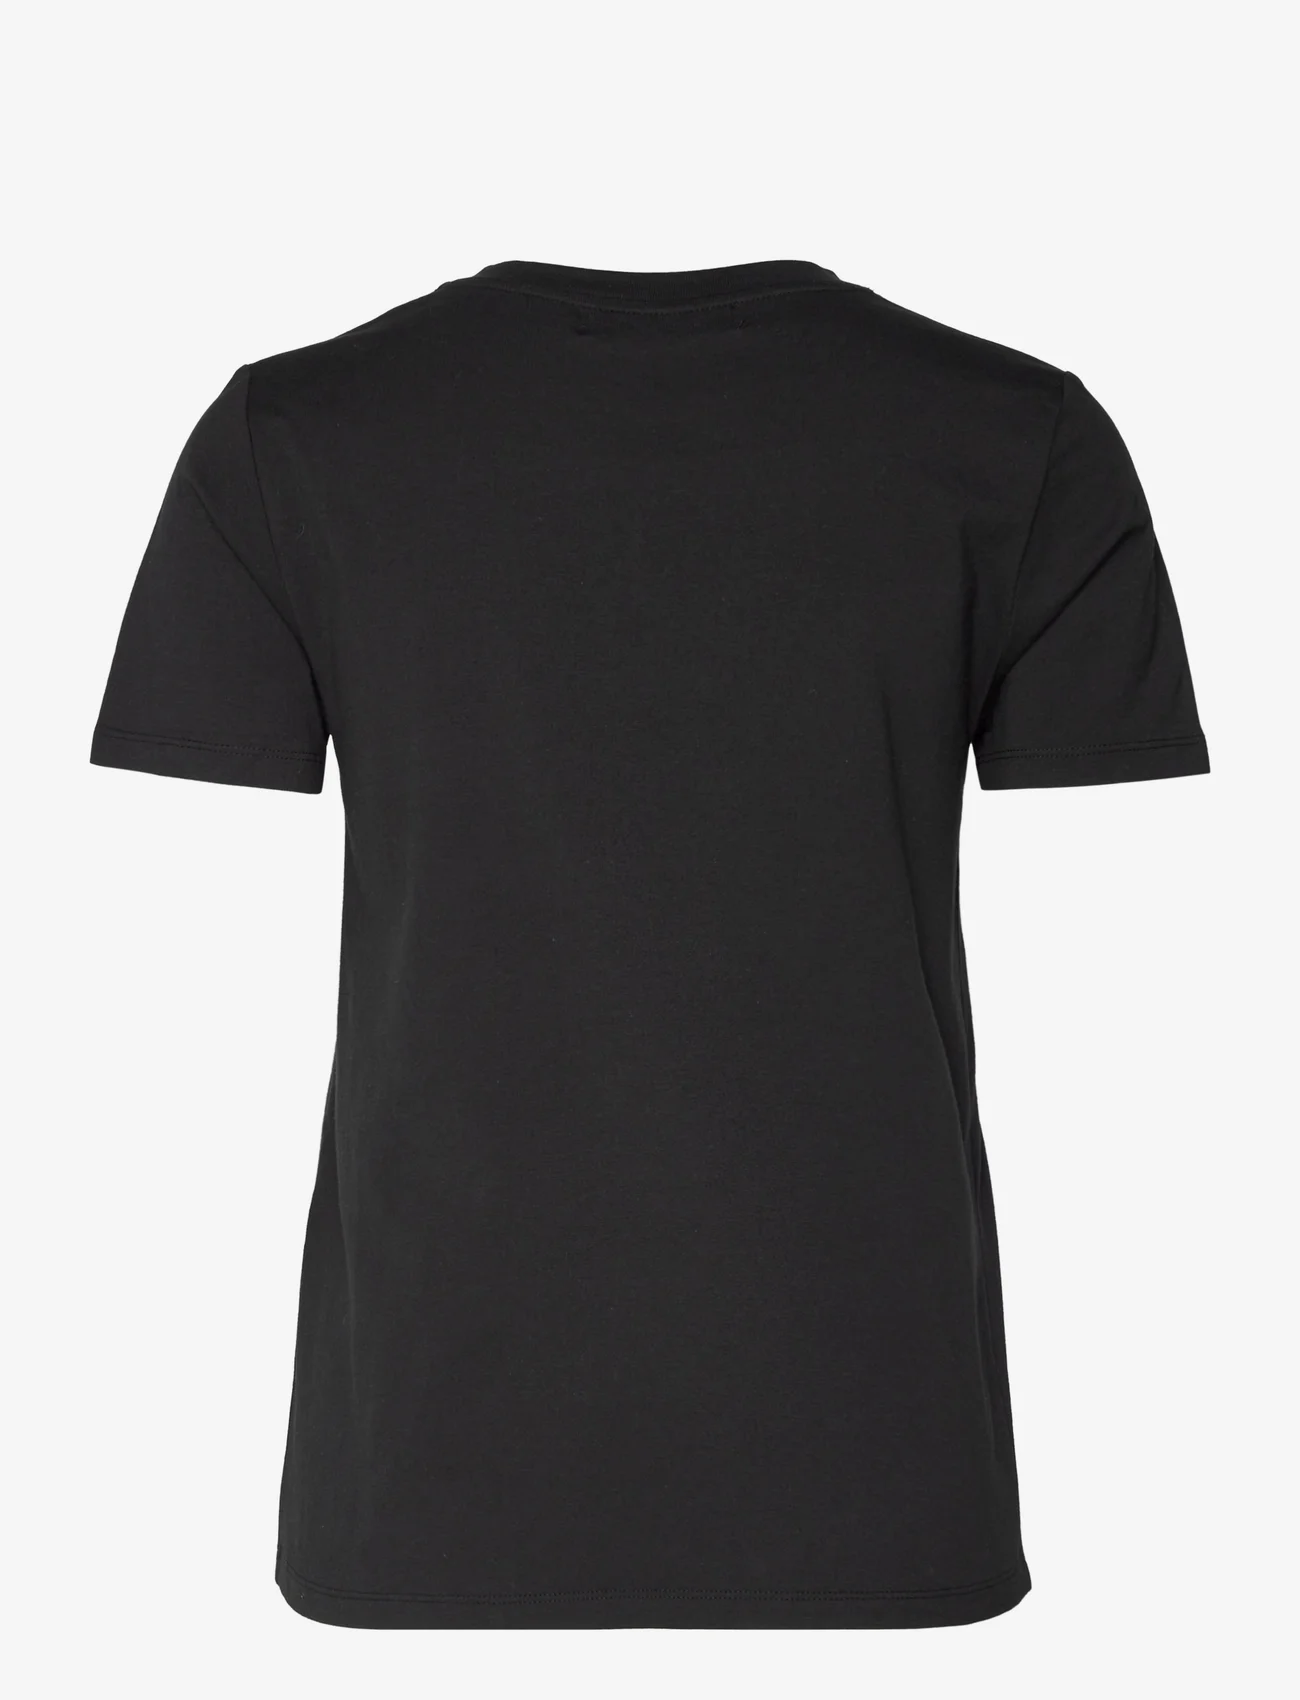 Rosemunde - Organic t-shirt - zemākās cenas - black - 1